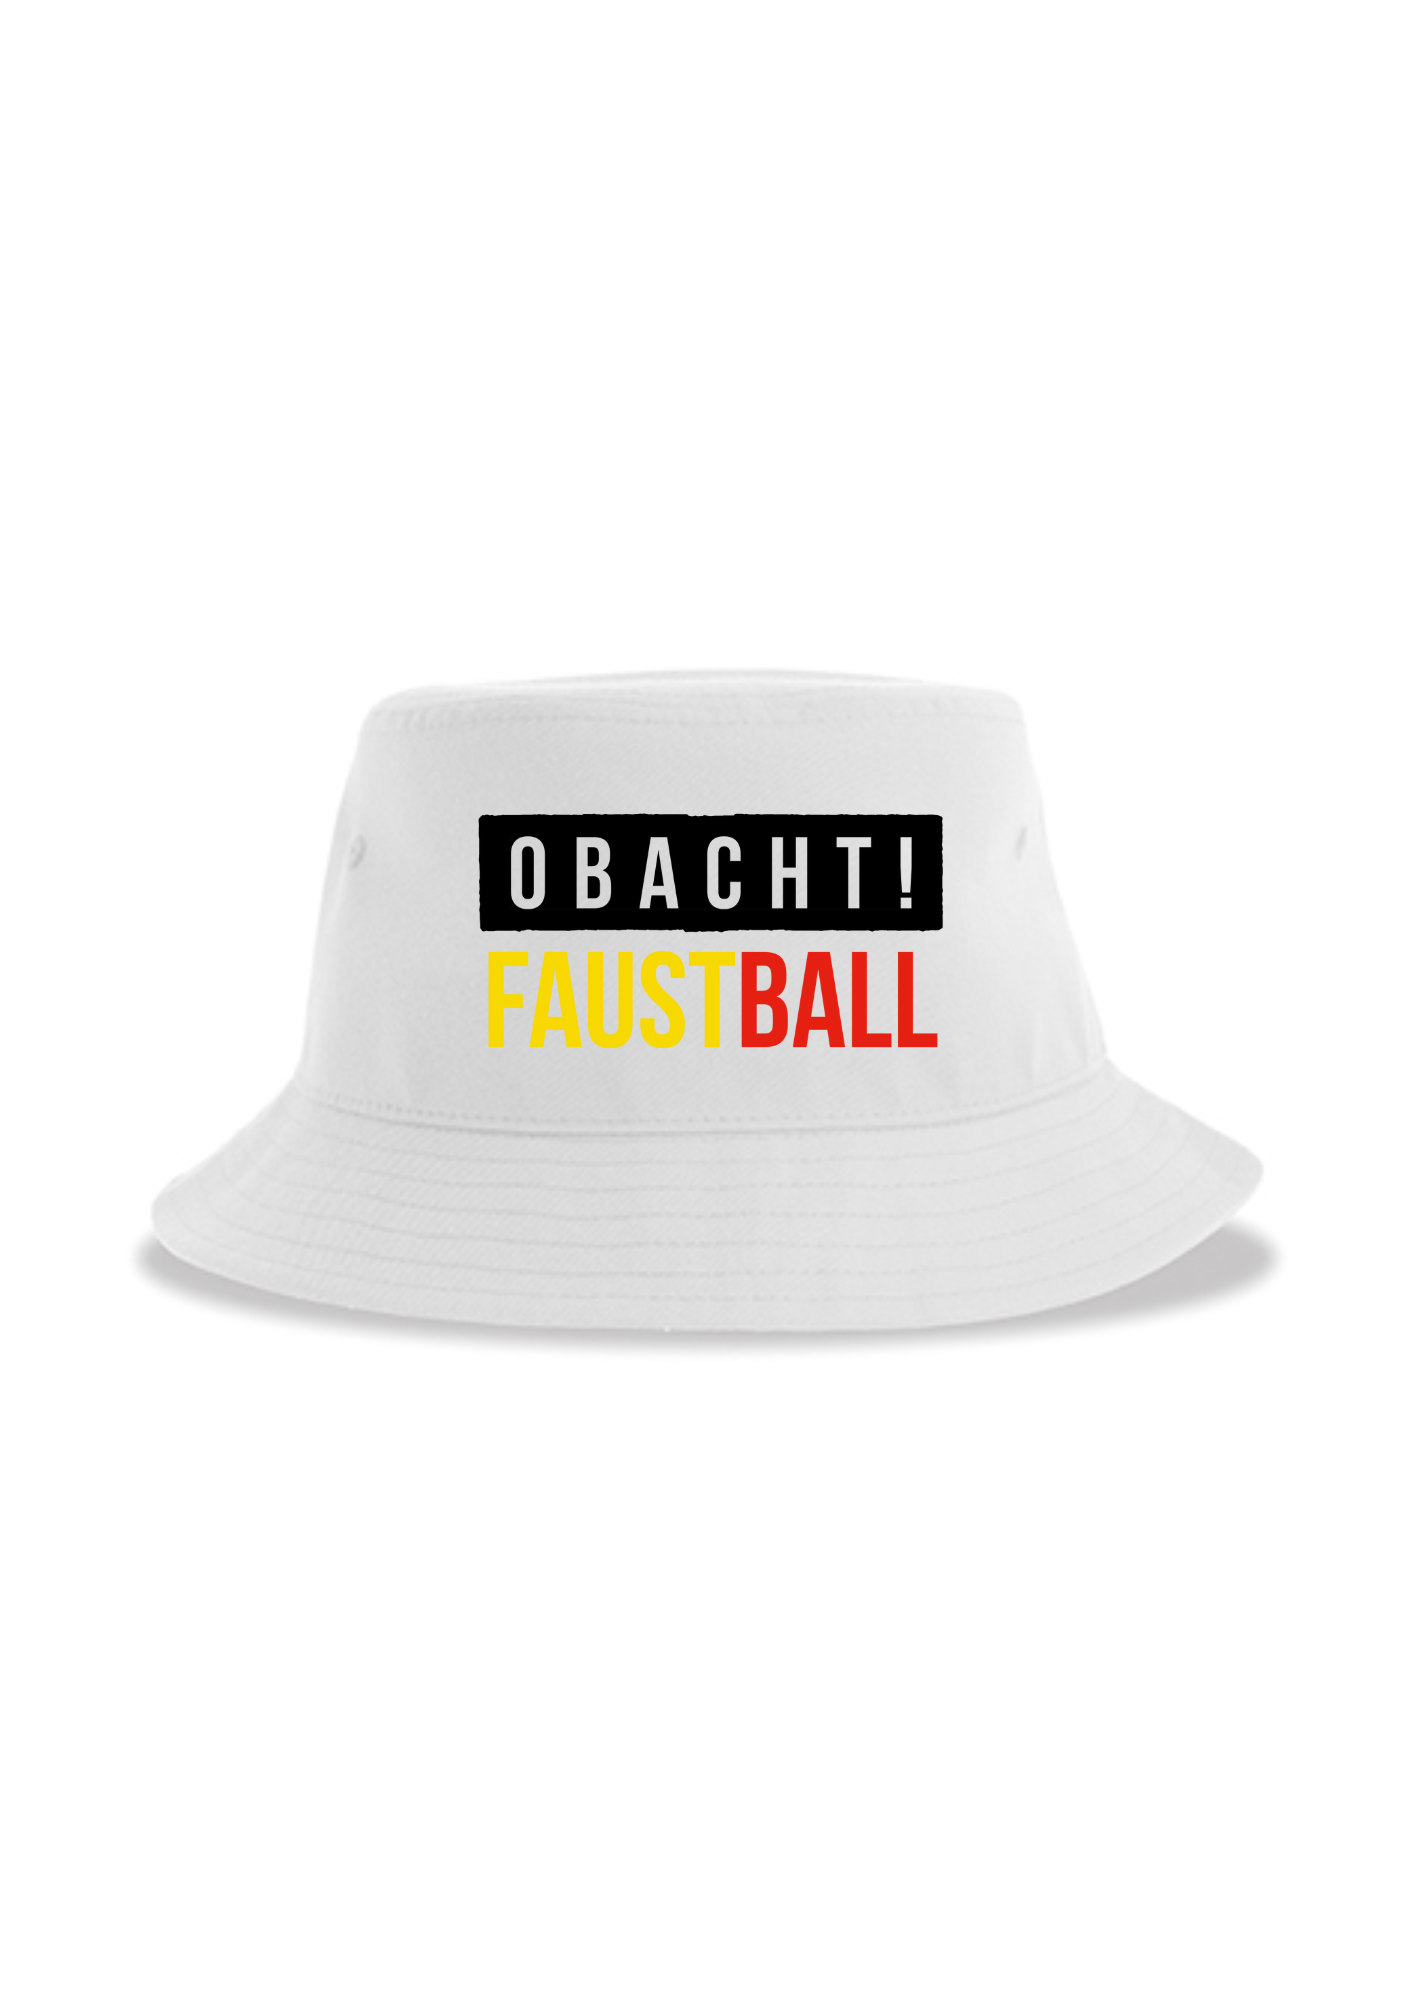 Faustball Fischerhut (Deutschland Edition)